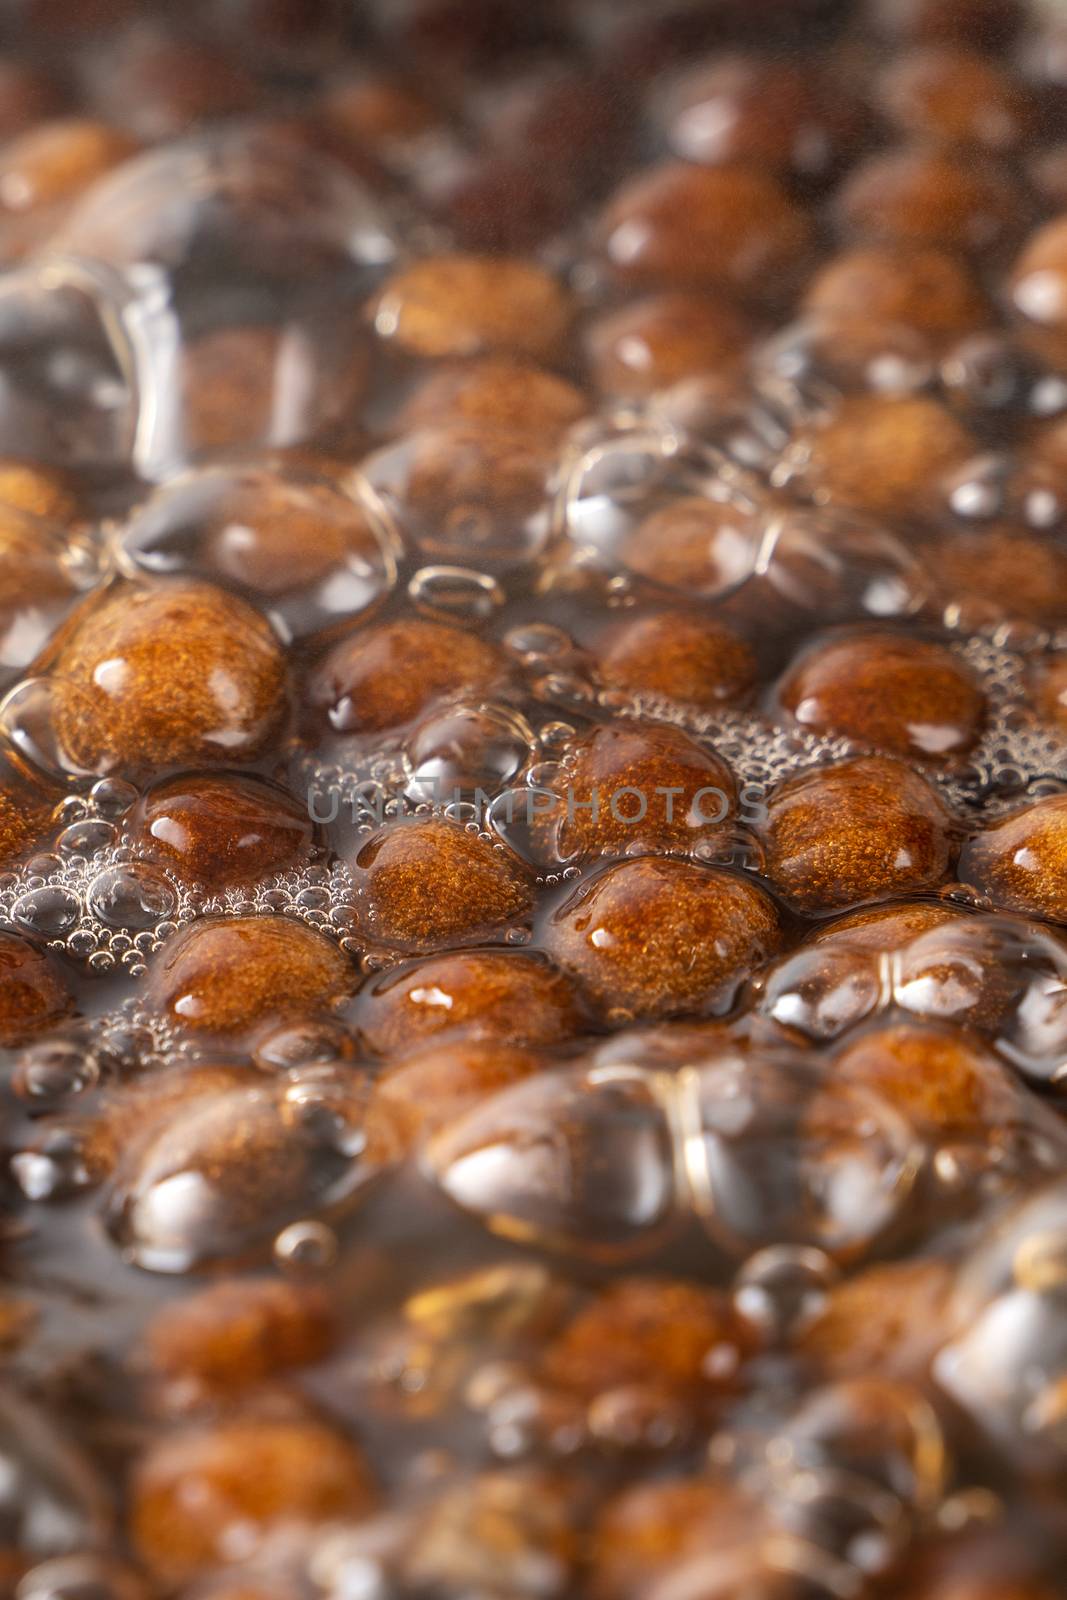 Cooking, boiling brown sugar flavor tapioca pearl balls, ingredi by ROMIXIMAGE